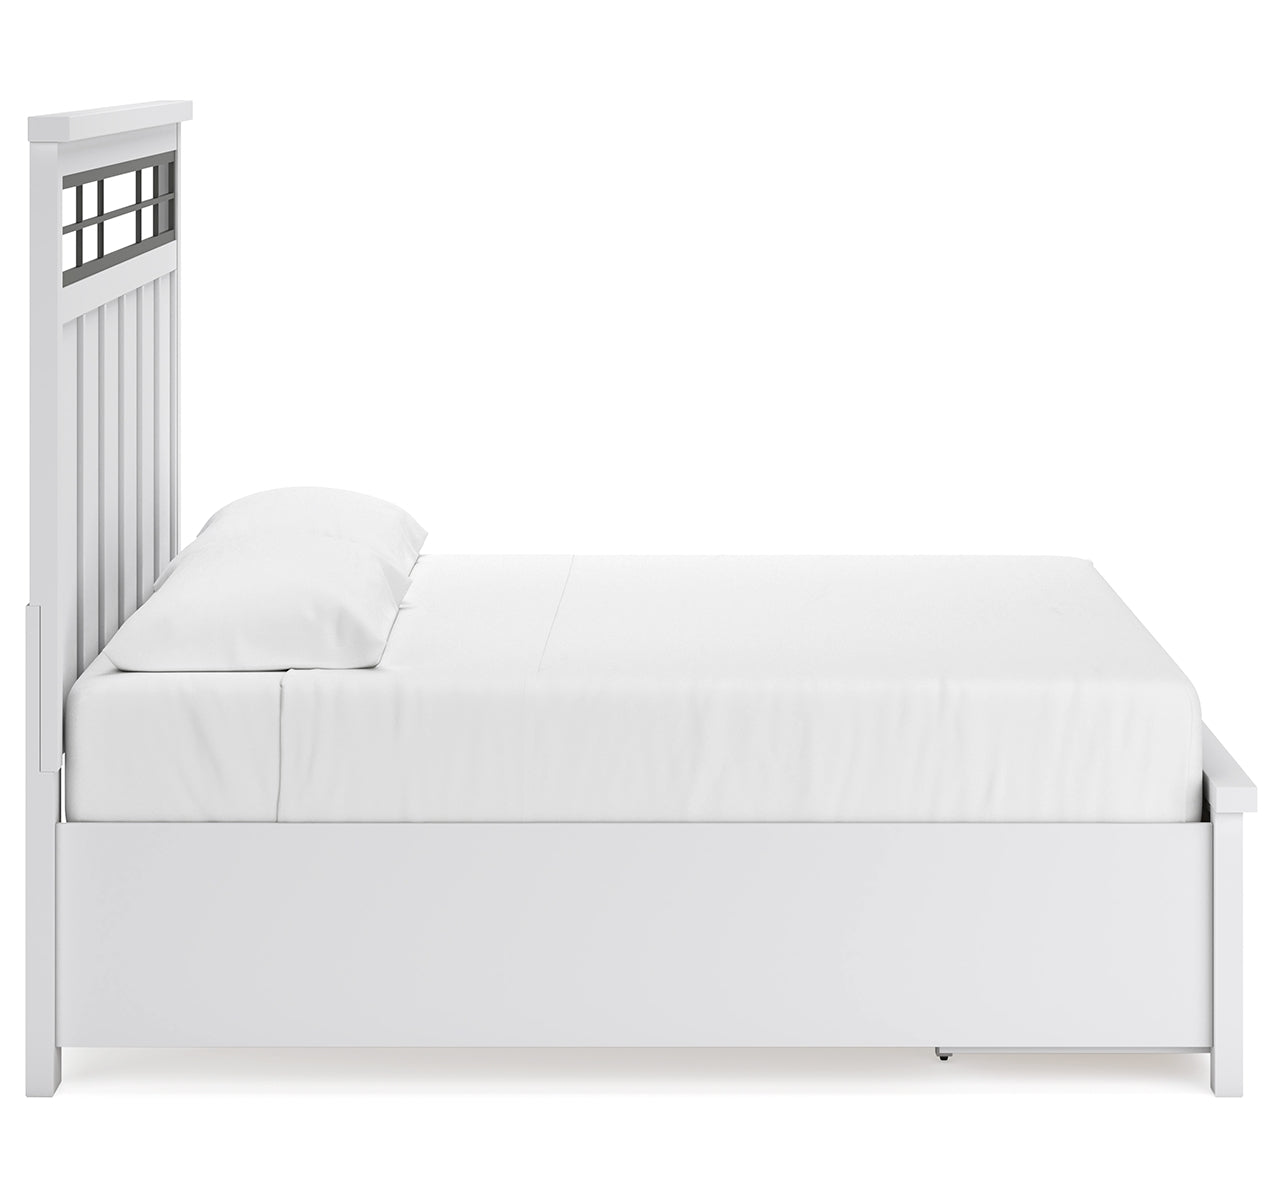 Ashbryn King Panel Storage Bed with Dresser